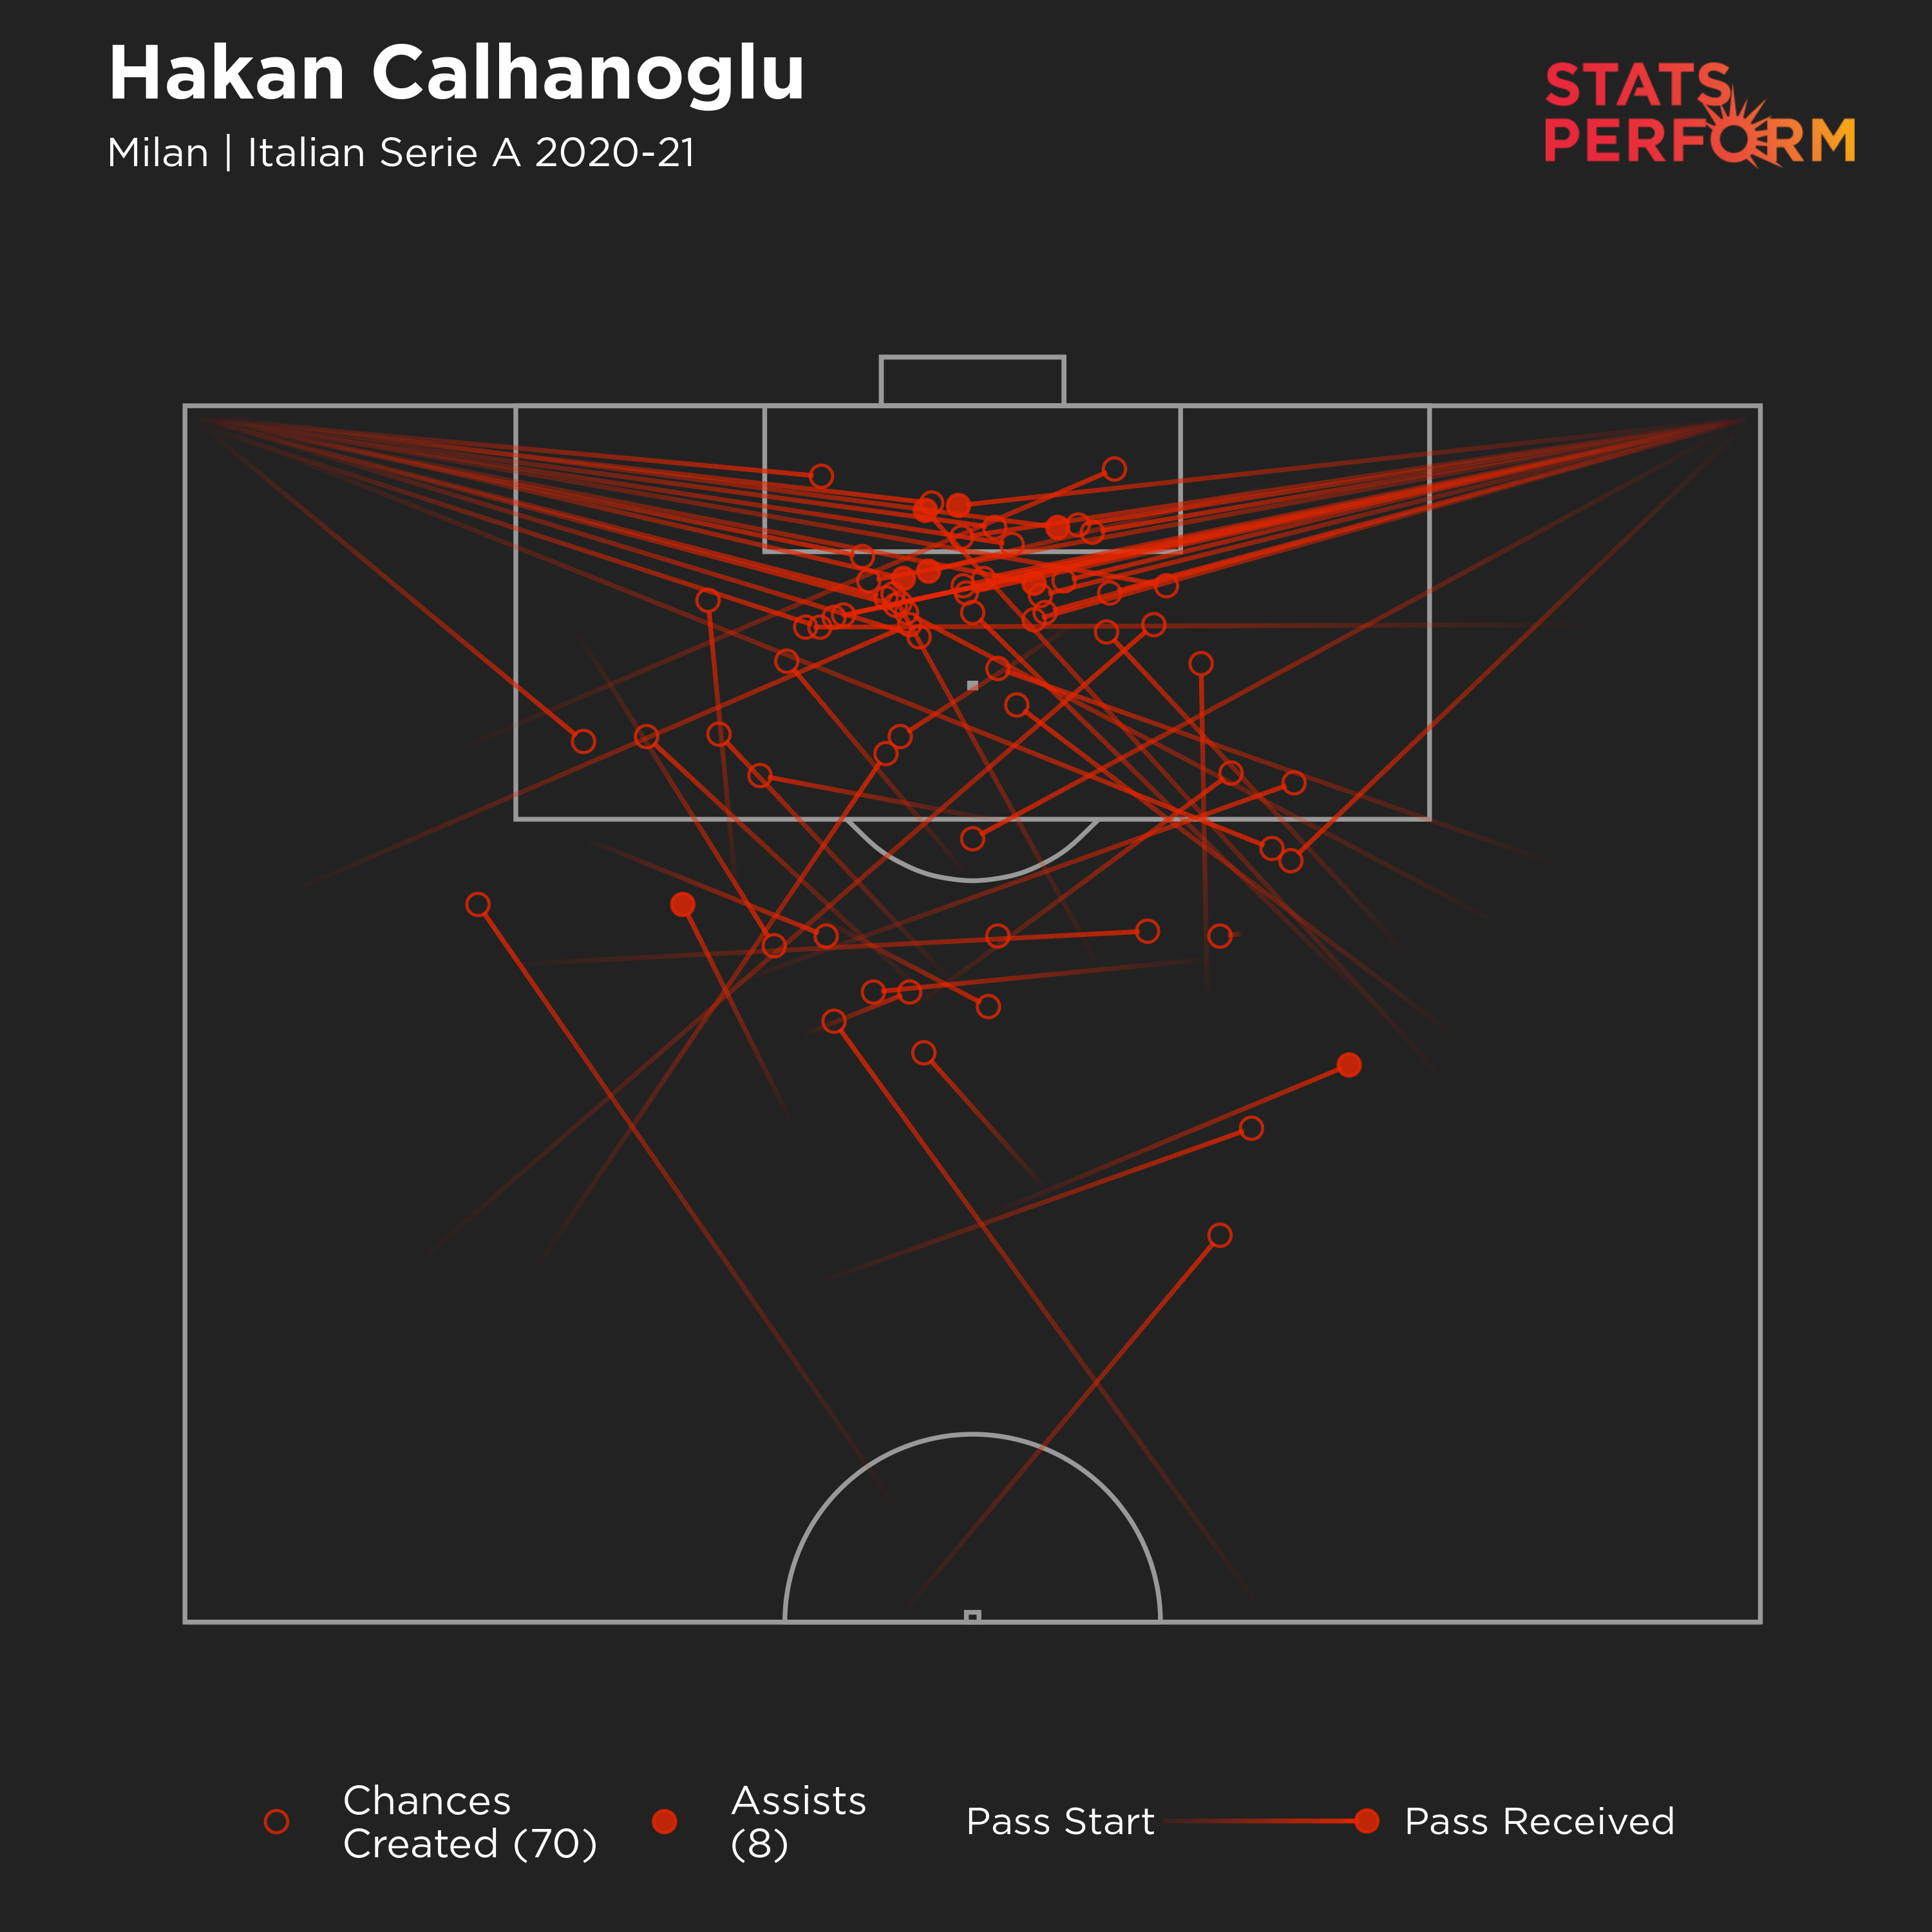 Hakan Calhanoglu's chance creation in Serie A